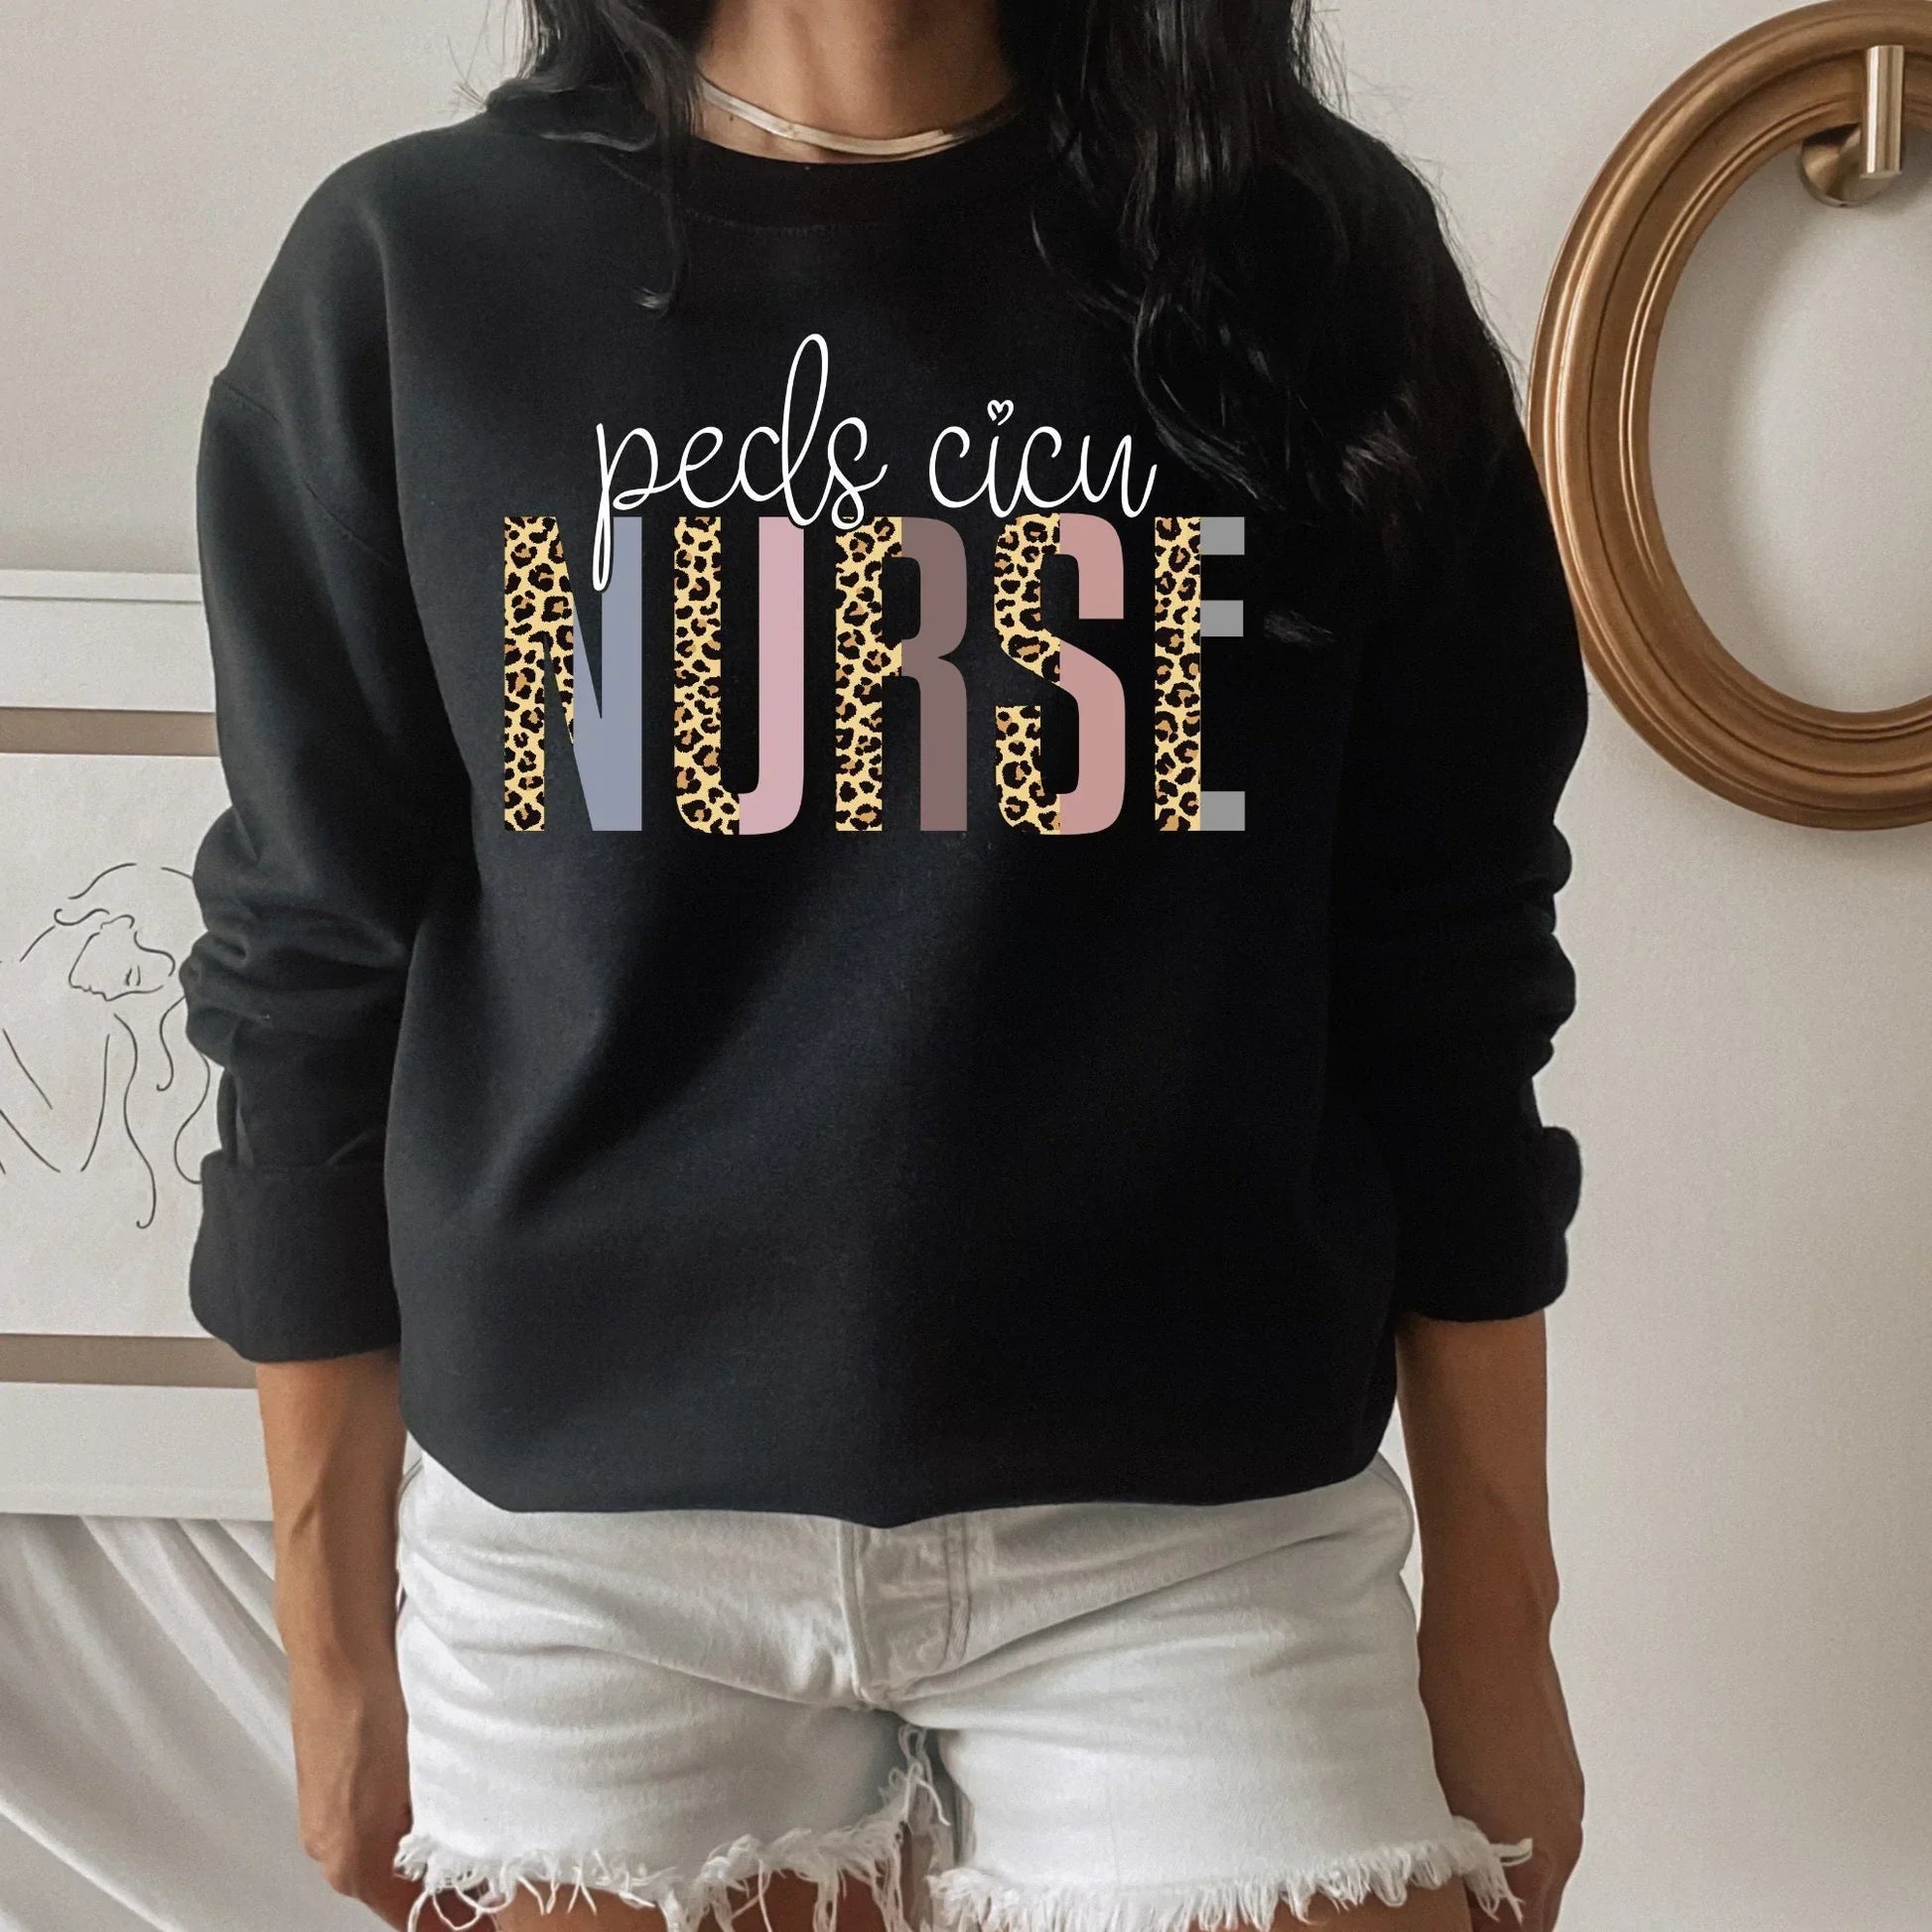 Pediatric Nurse Shirt, Peds CICU, Pediatric Cardiovascular Intensive Care Unit, Heart Warrior, Nurse Week, Tops, Tees, Sweatshirt & Hoodie